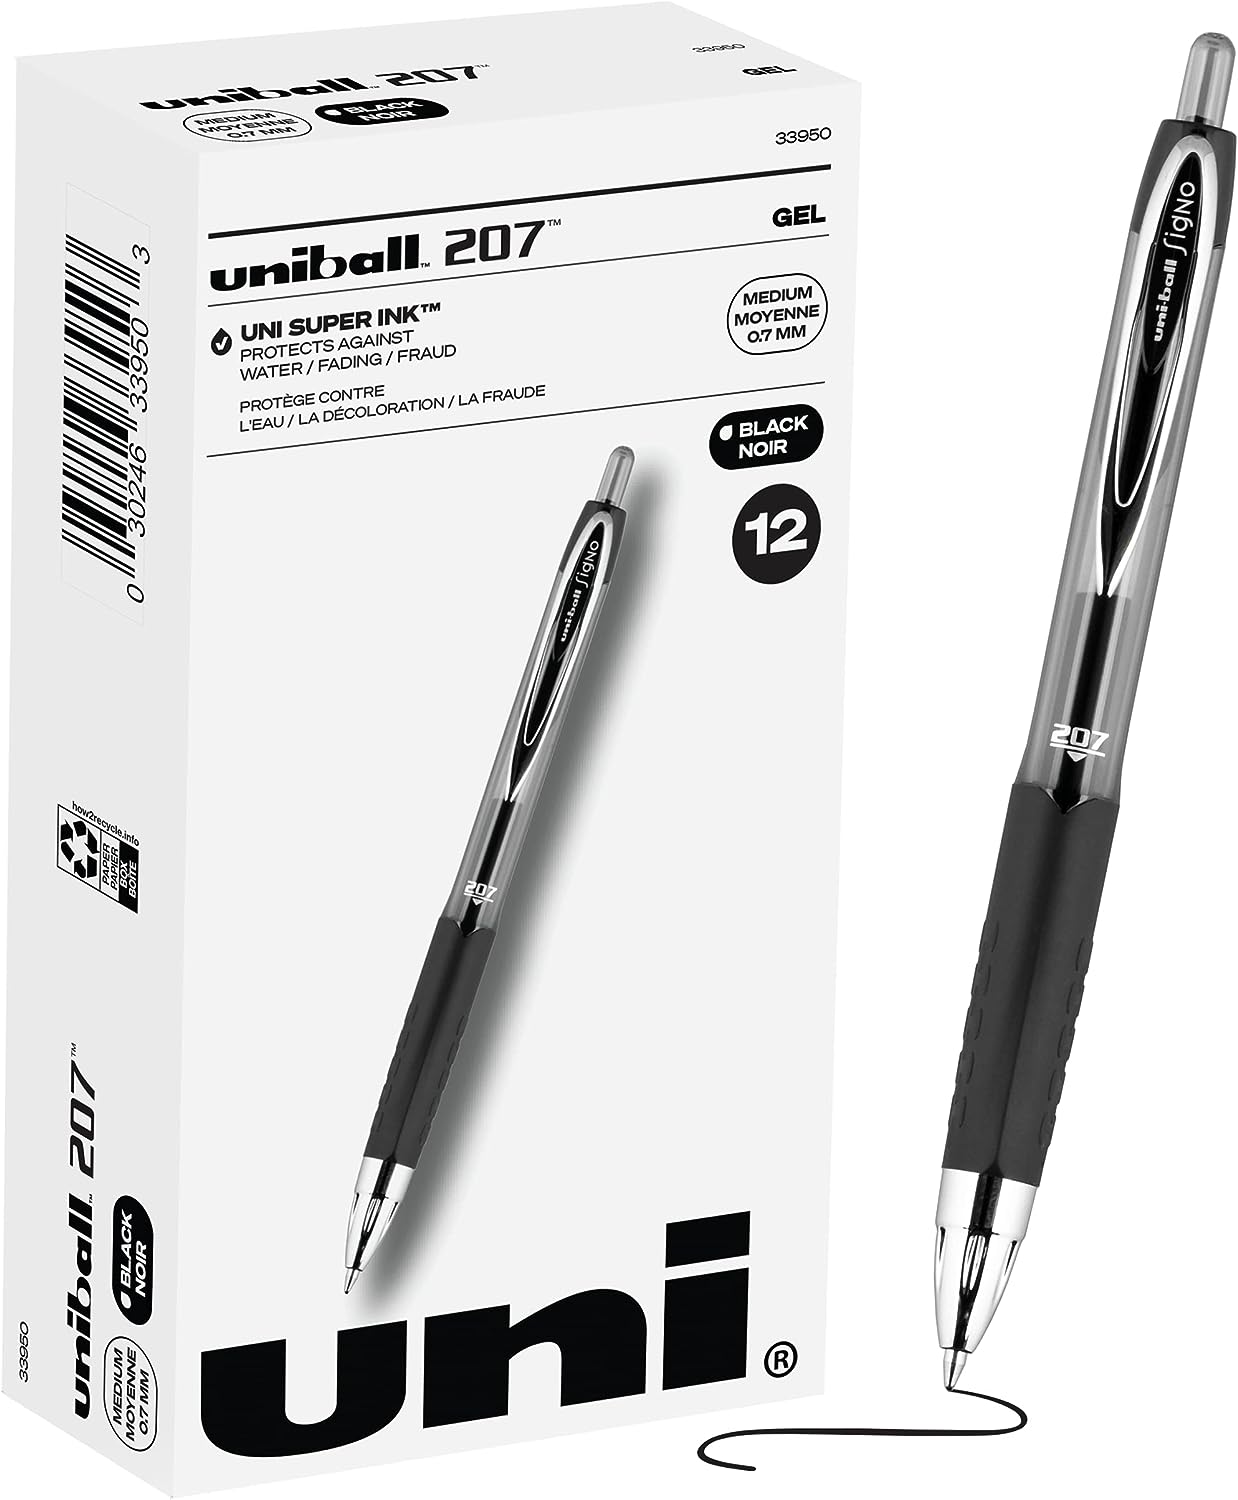 The Best Pen for Taking Notes – TechStarZone